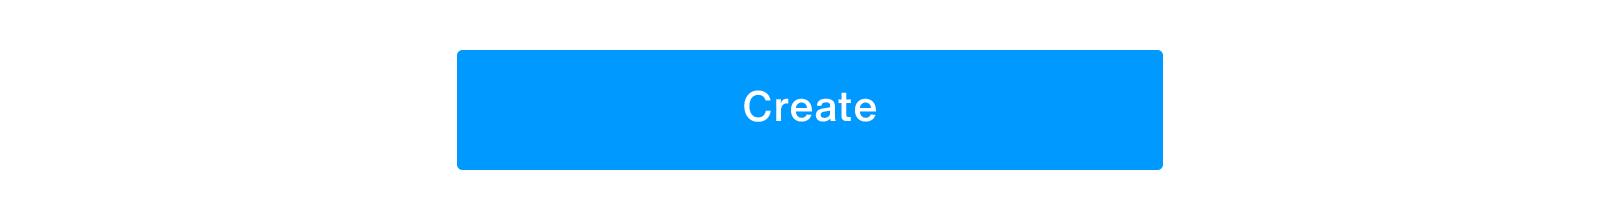 create button_02